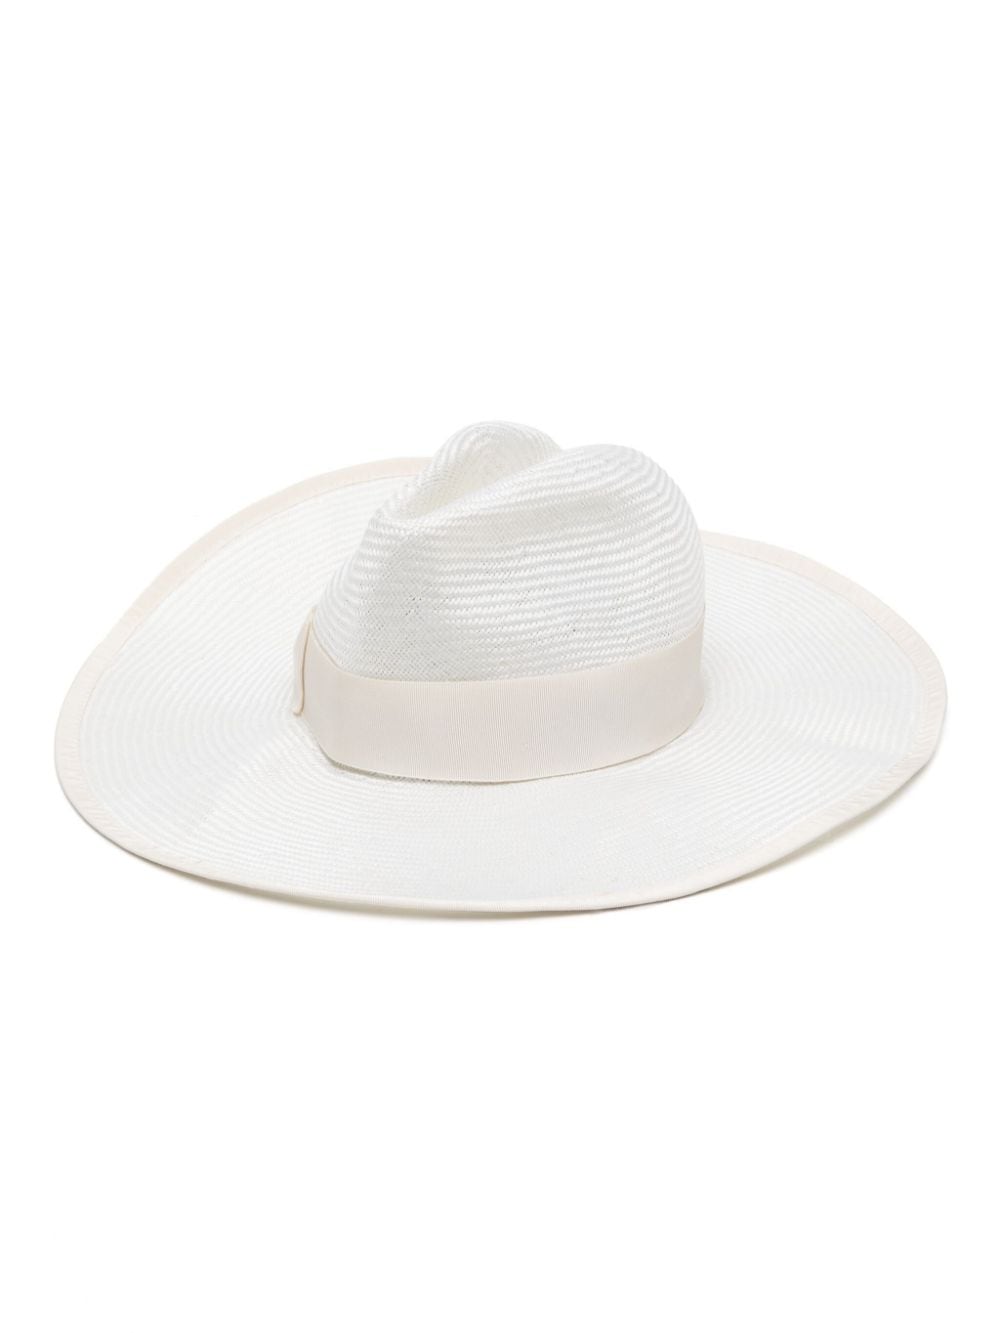 Borsalino Sophie Parasisol straw hat - White von Borsalino